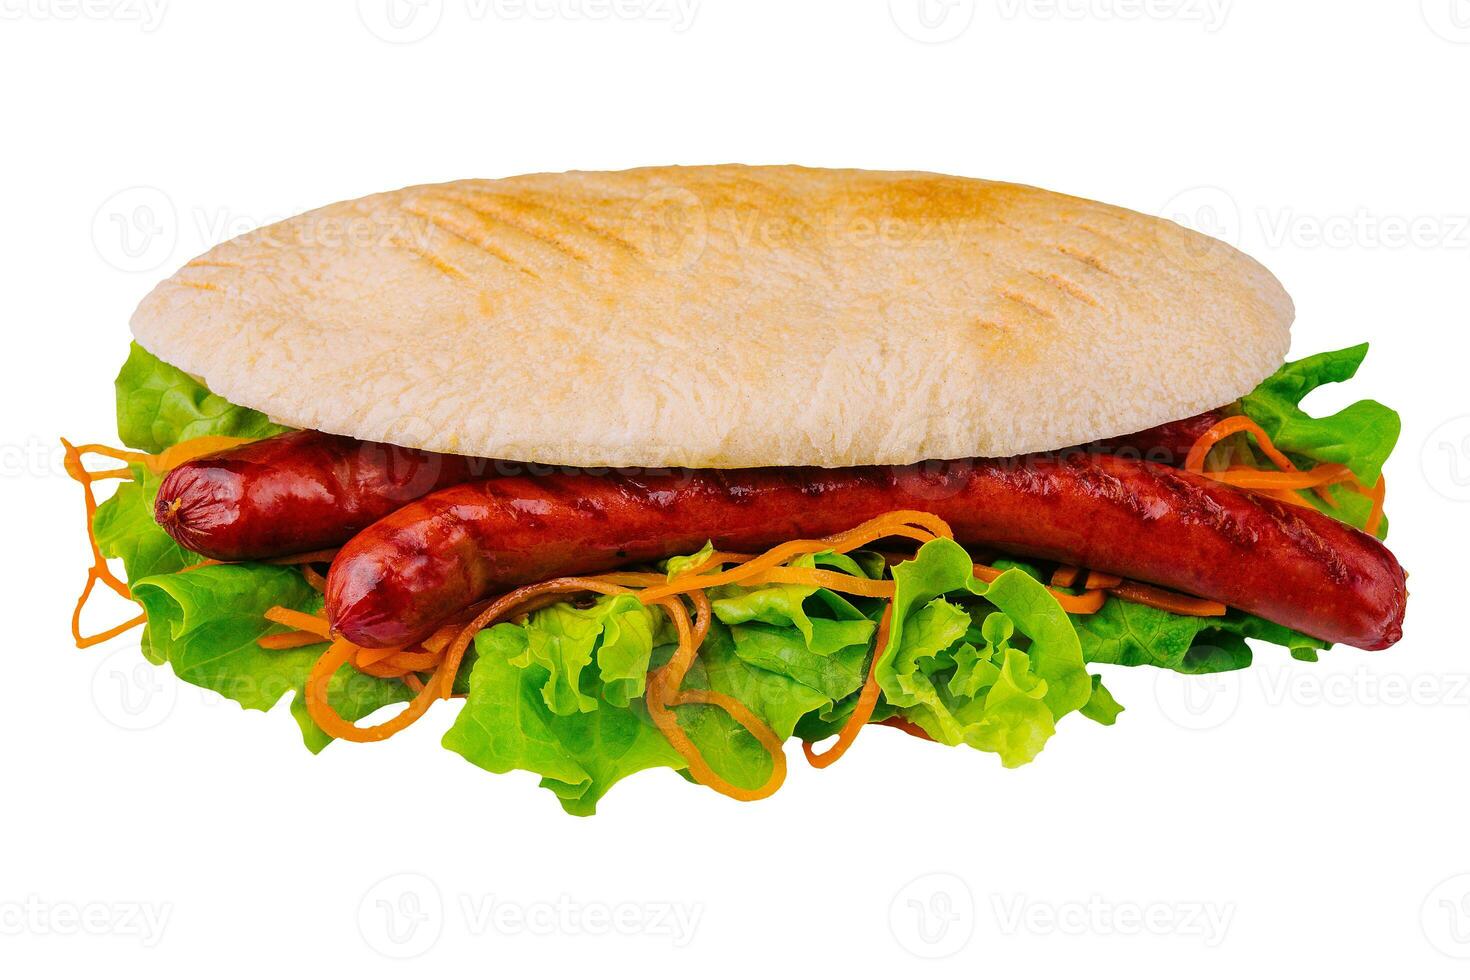 Hot dog - sandwich with sausage in pita photo